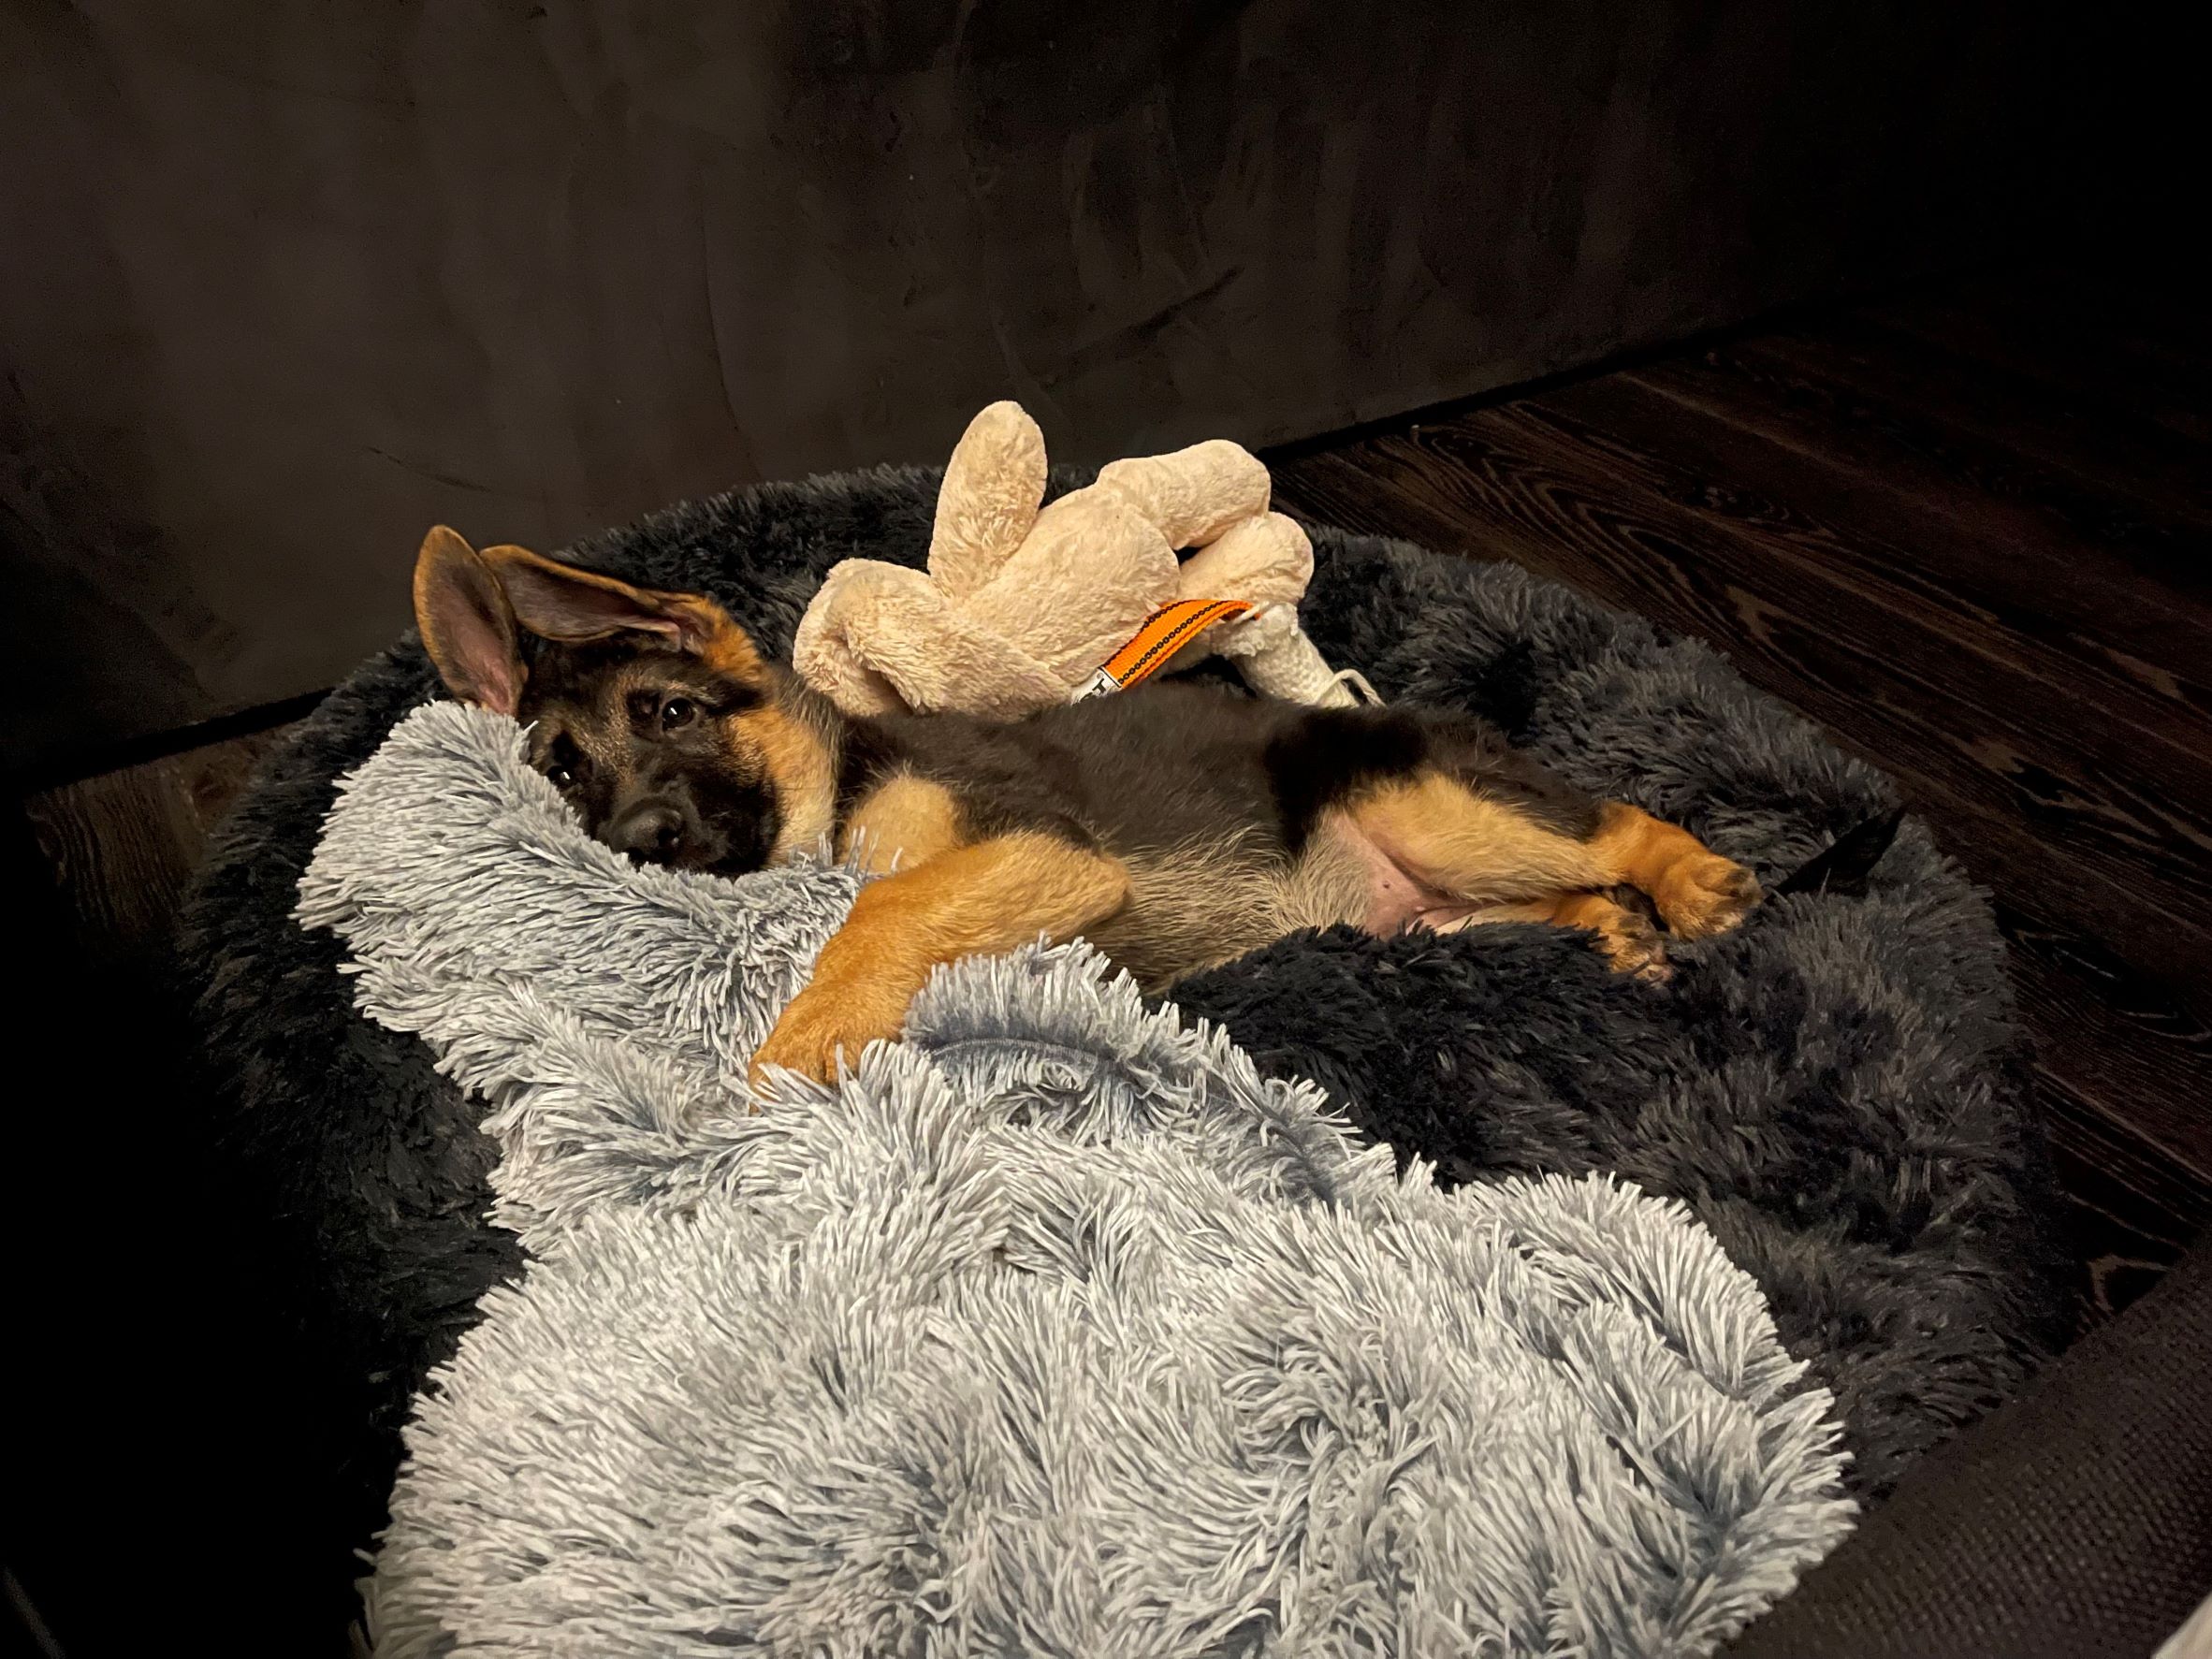 German shepherd puppy on fluffy rug